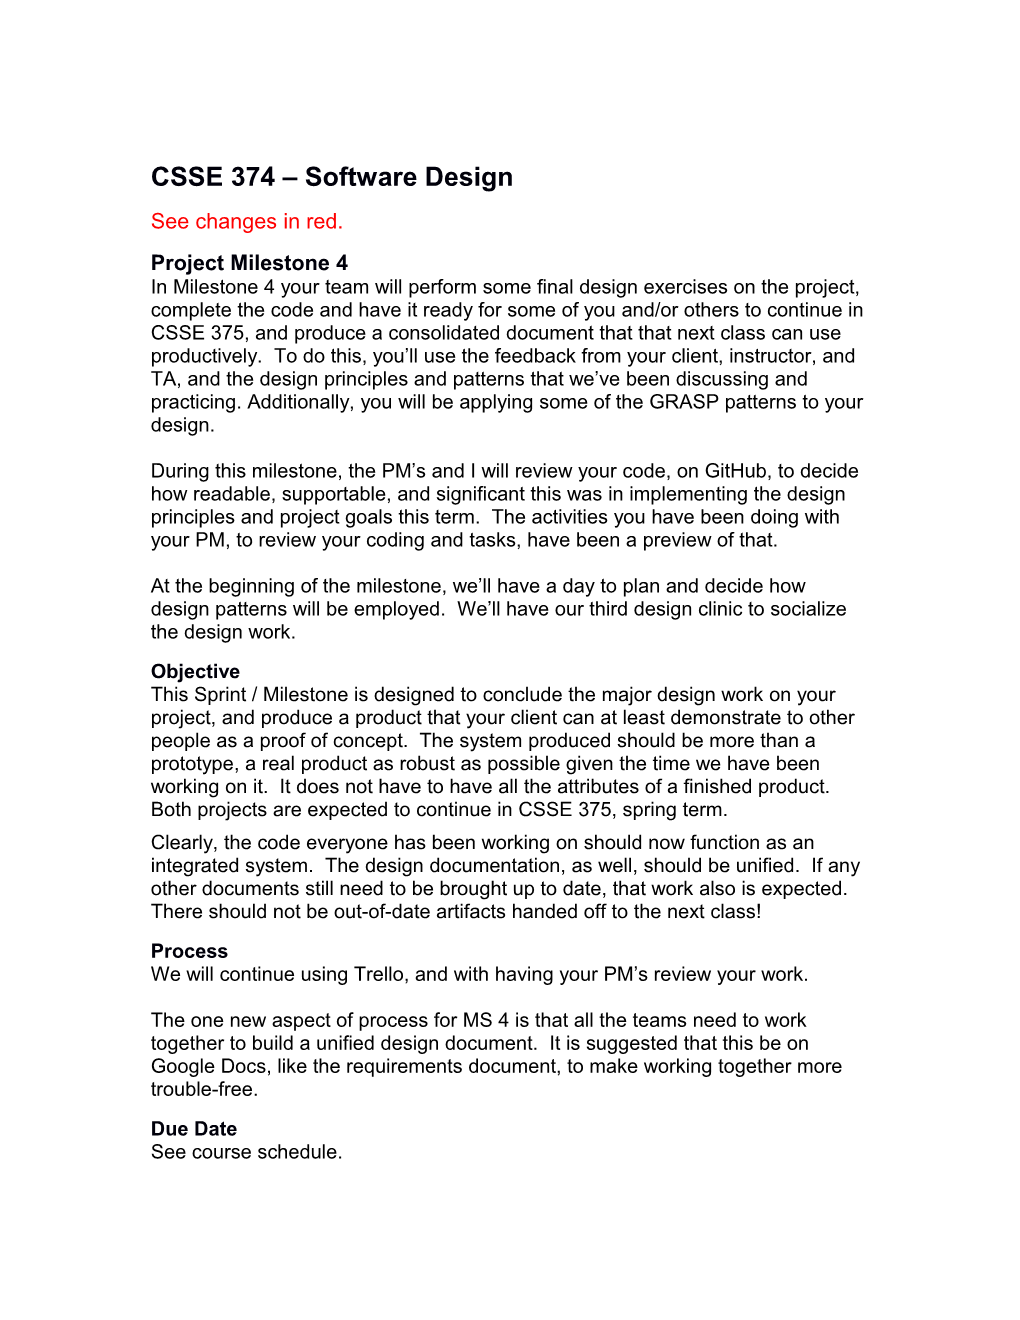 CSSE 374 Software Design